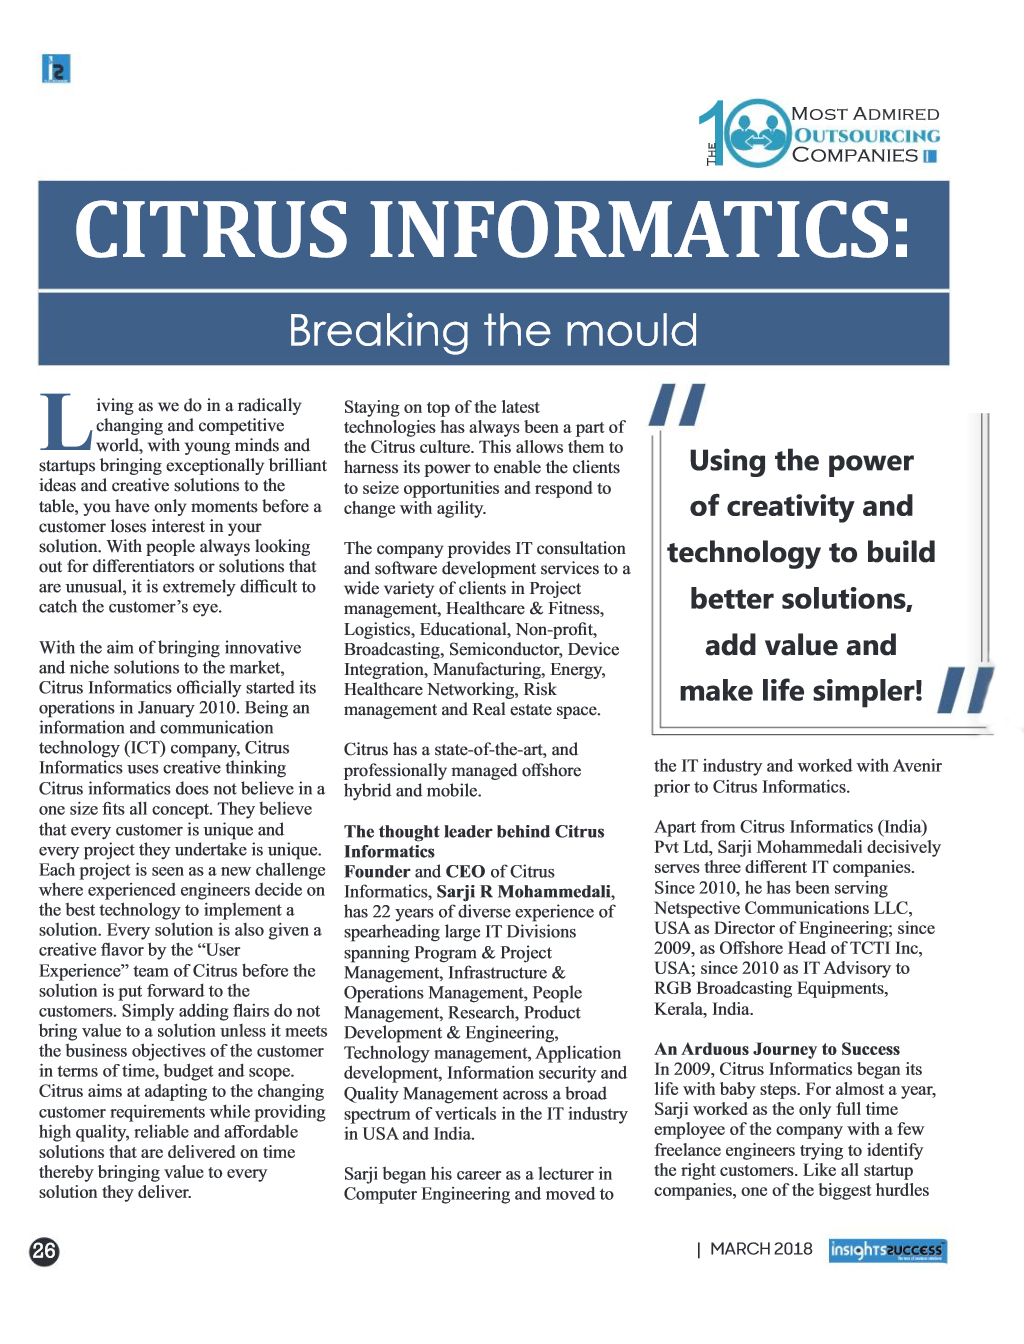 citrus-news-informatics-breaking-the-world